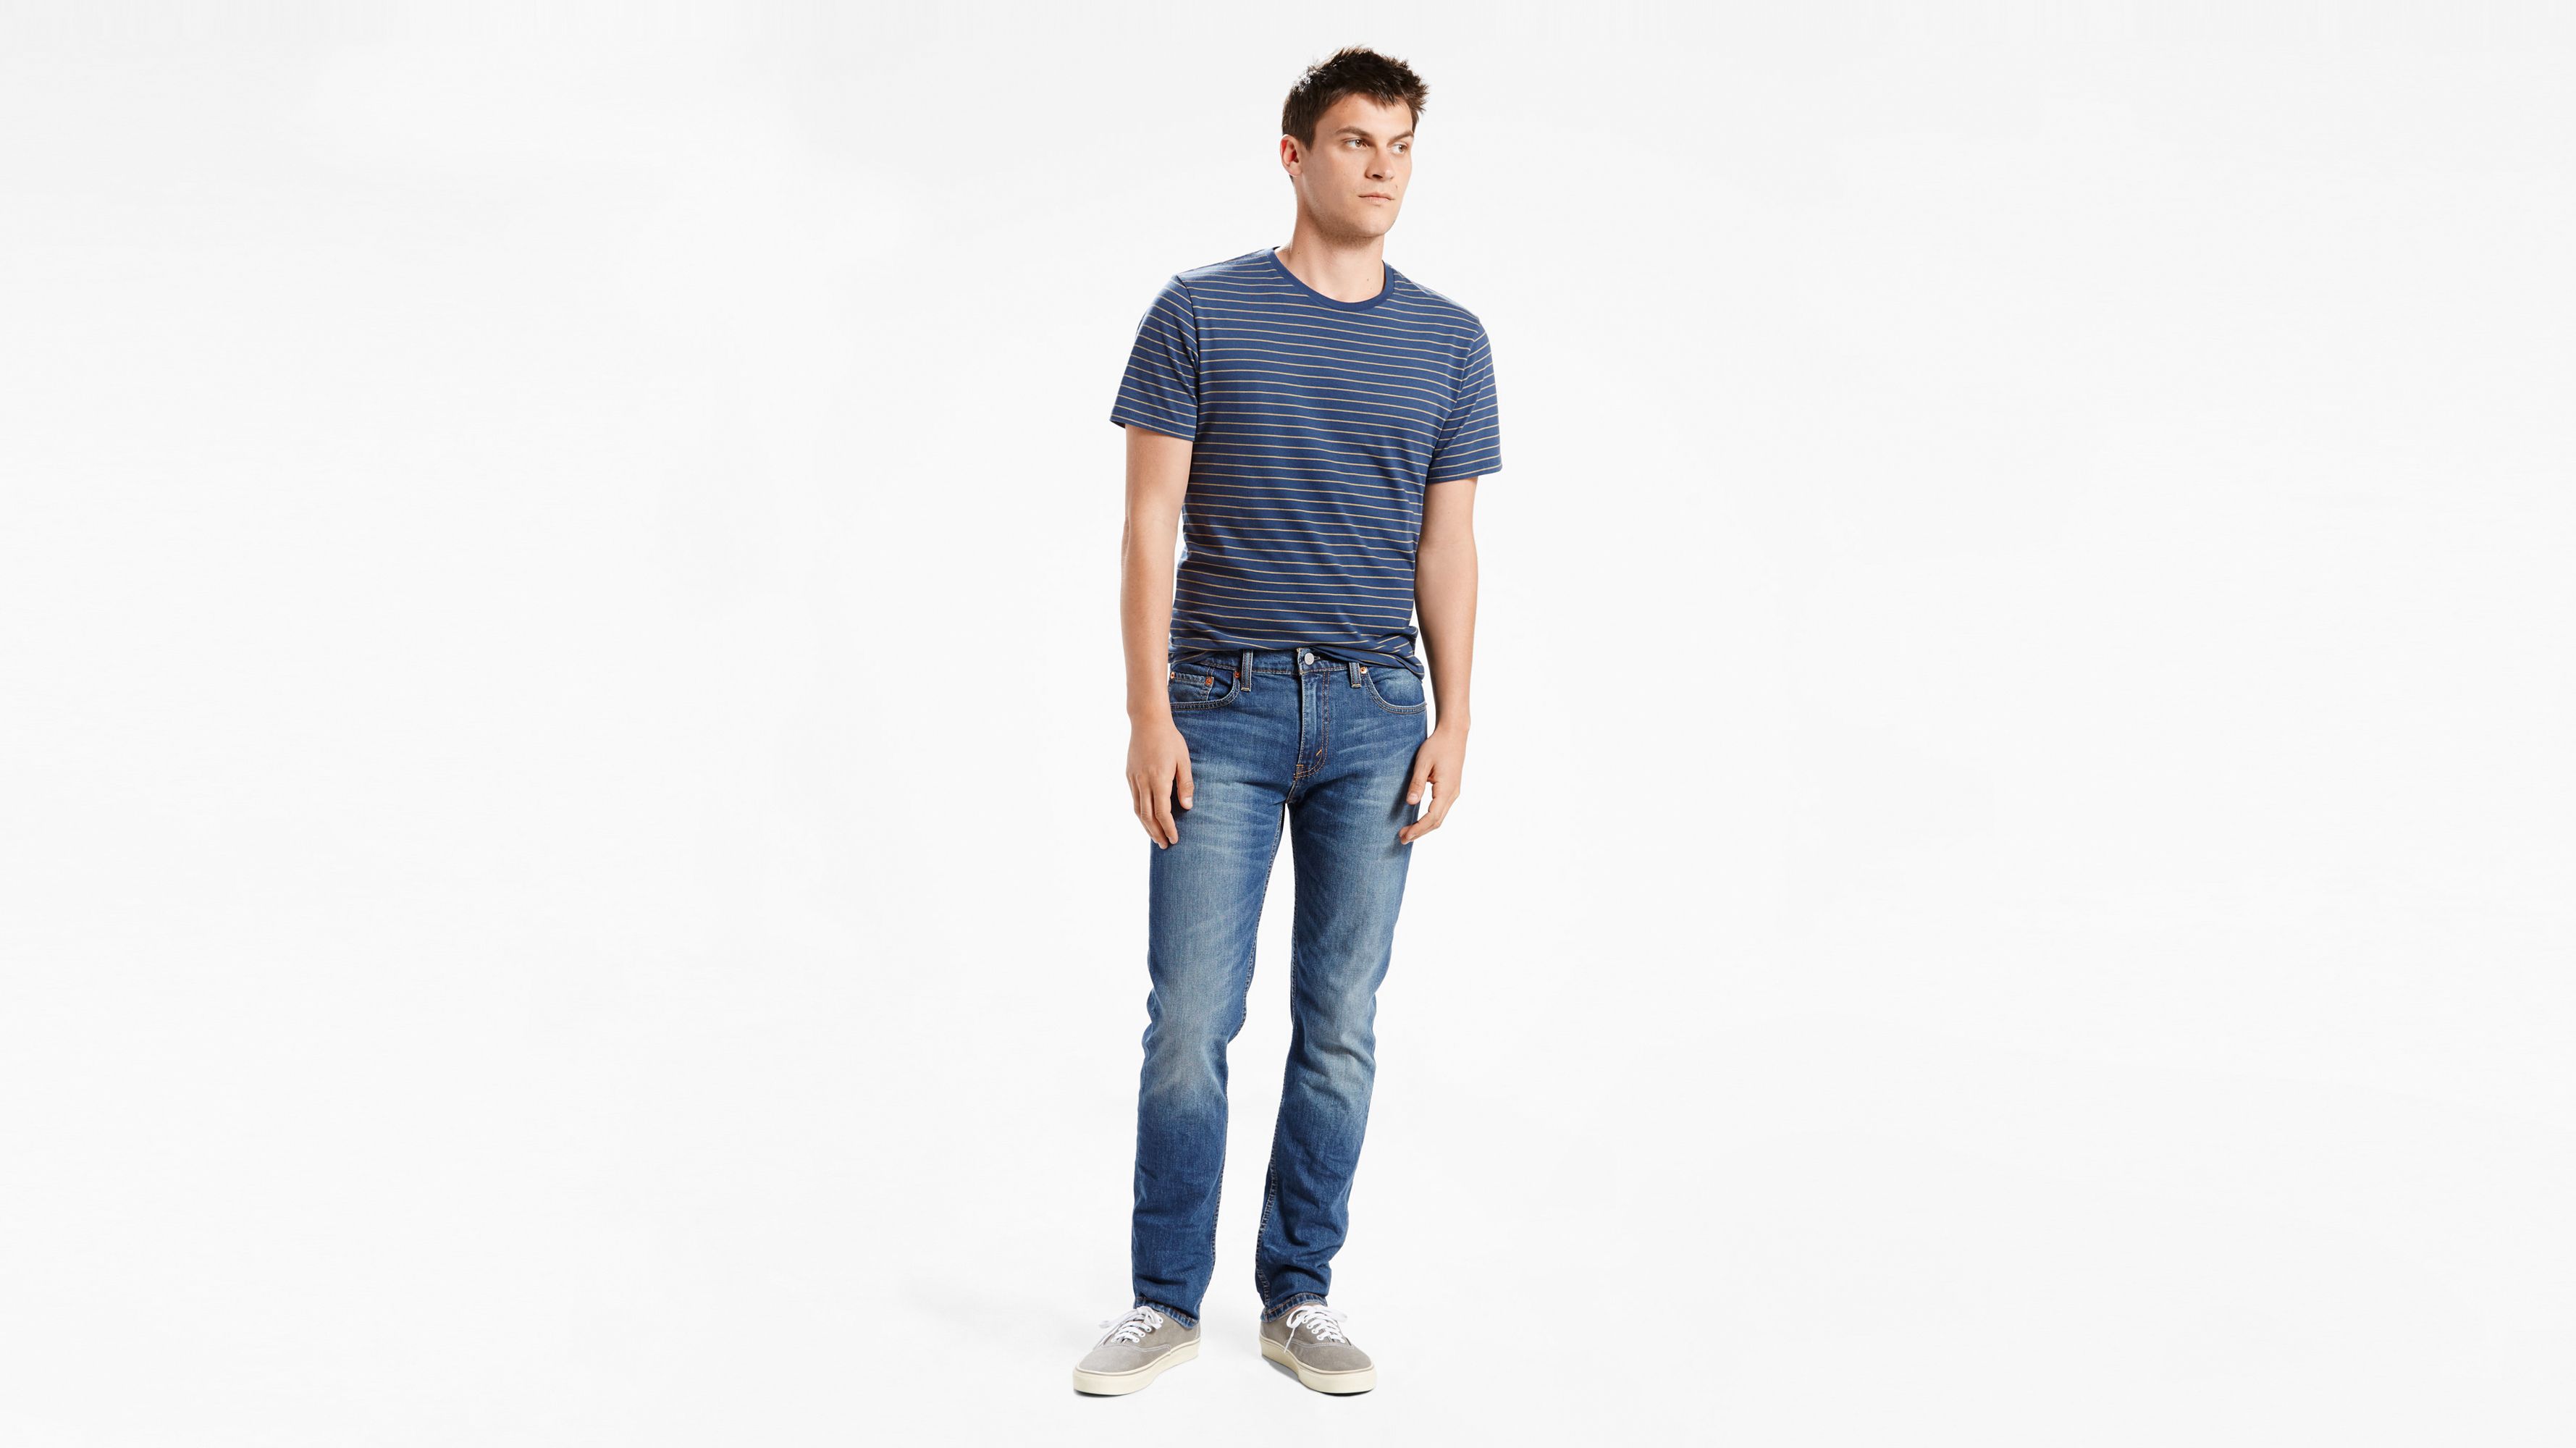 men's levi's 511 slim fit stretch jeans